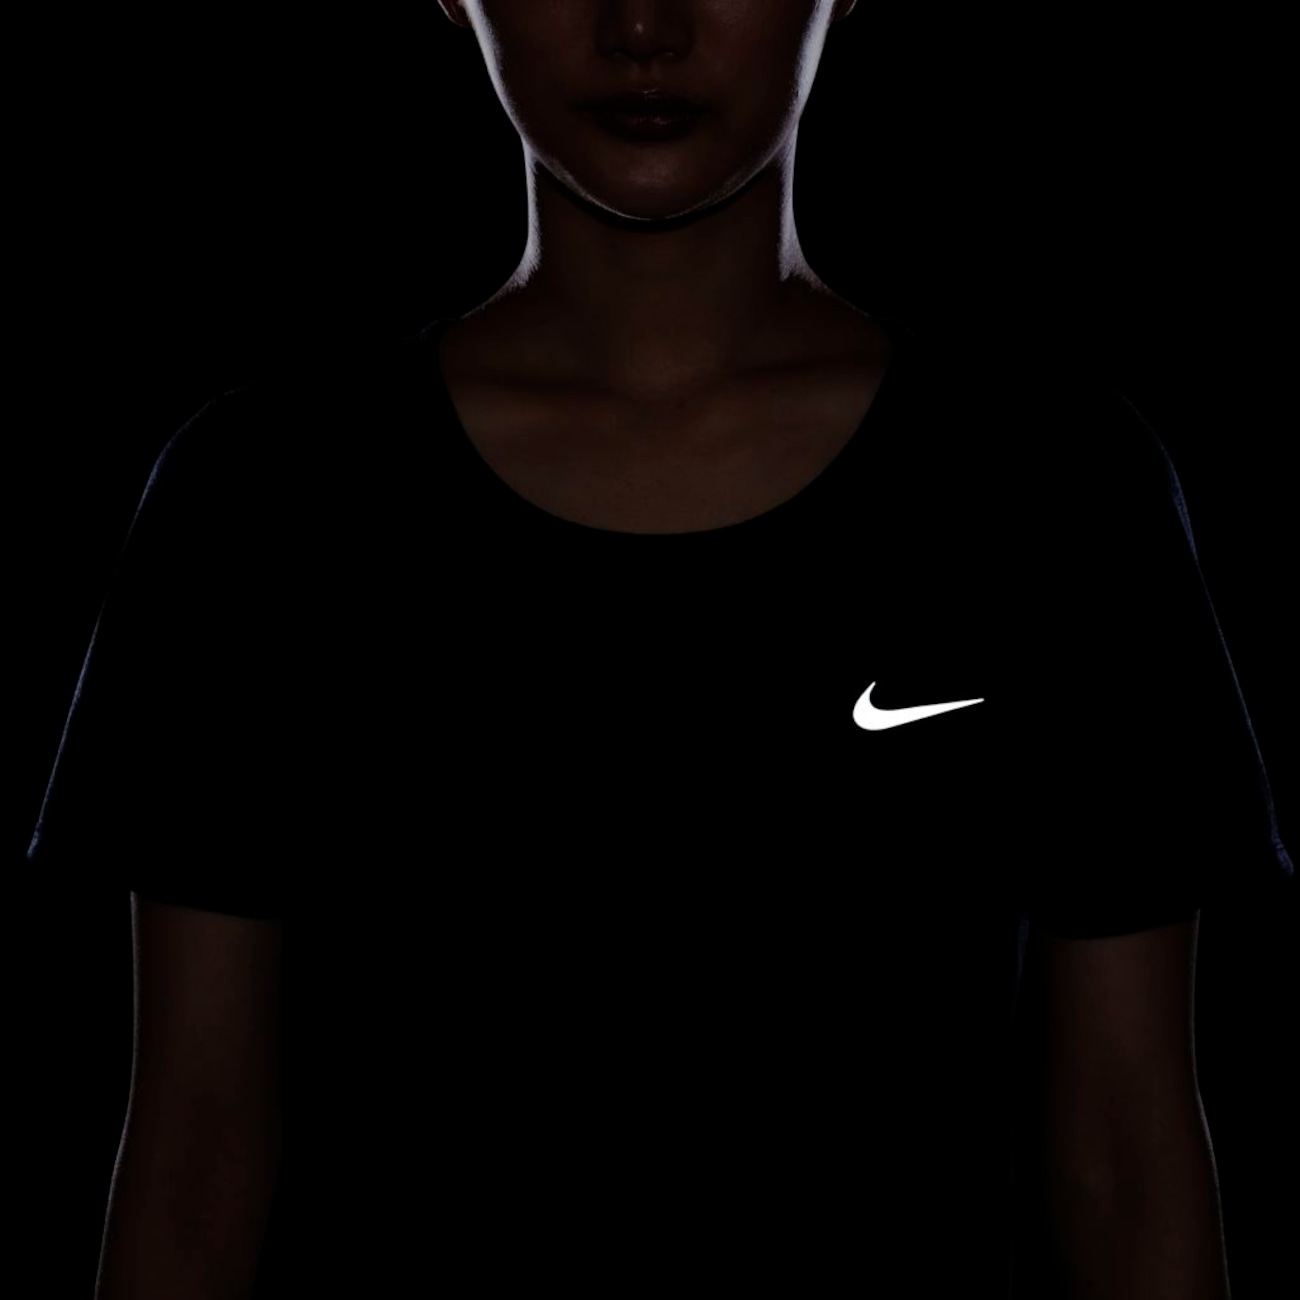 Camiseta Nike Dri-FIT Run Division Feminina - Foto 6